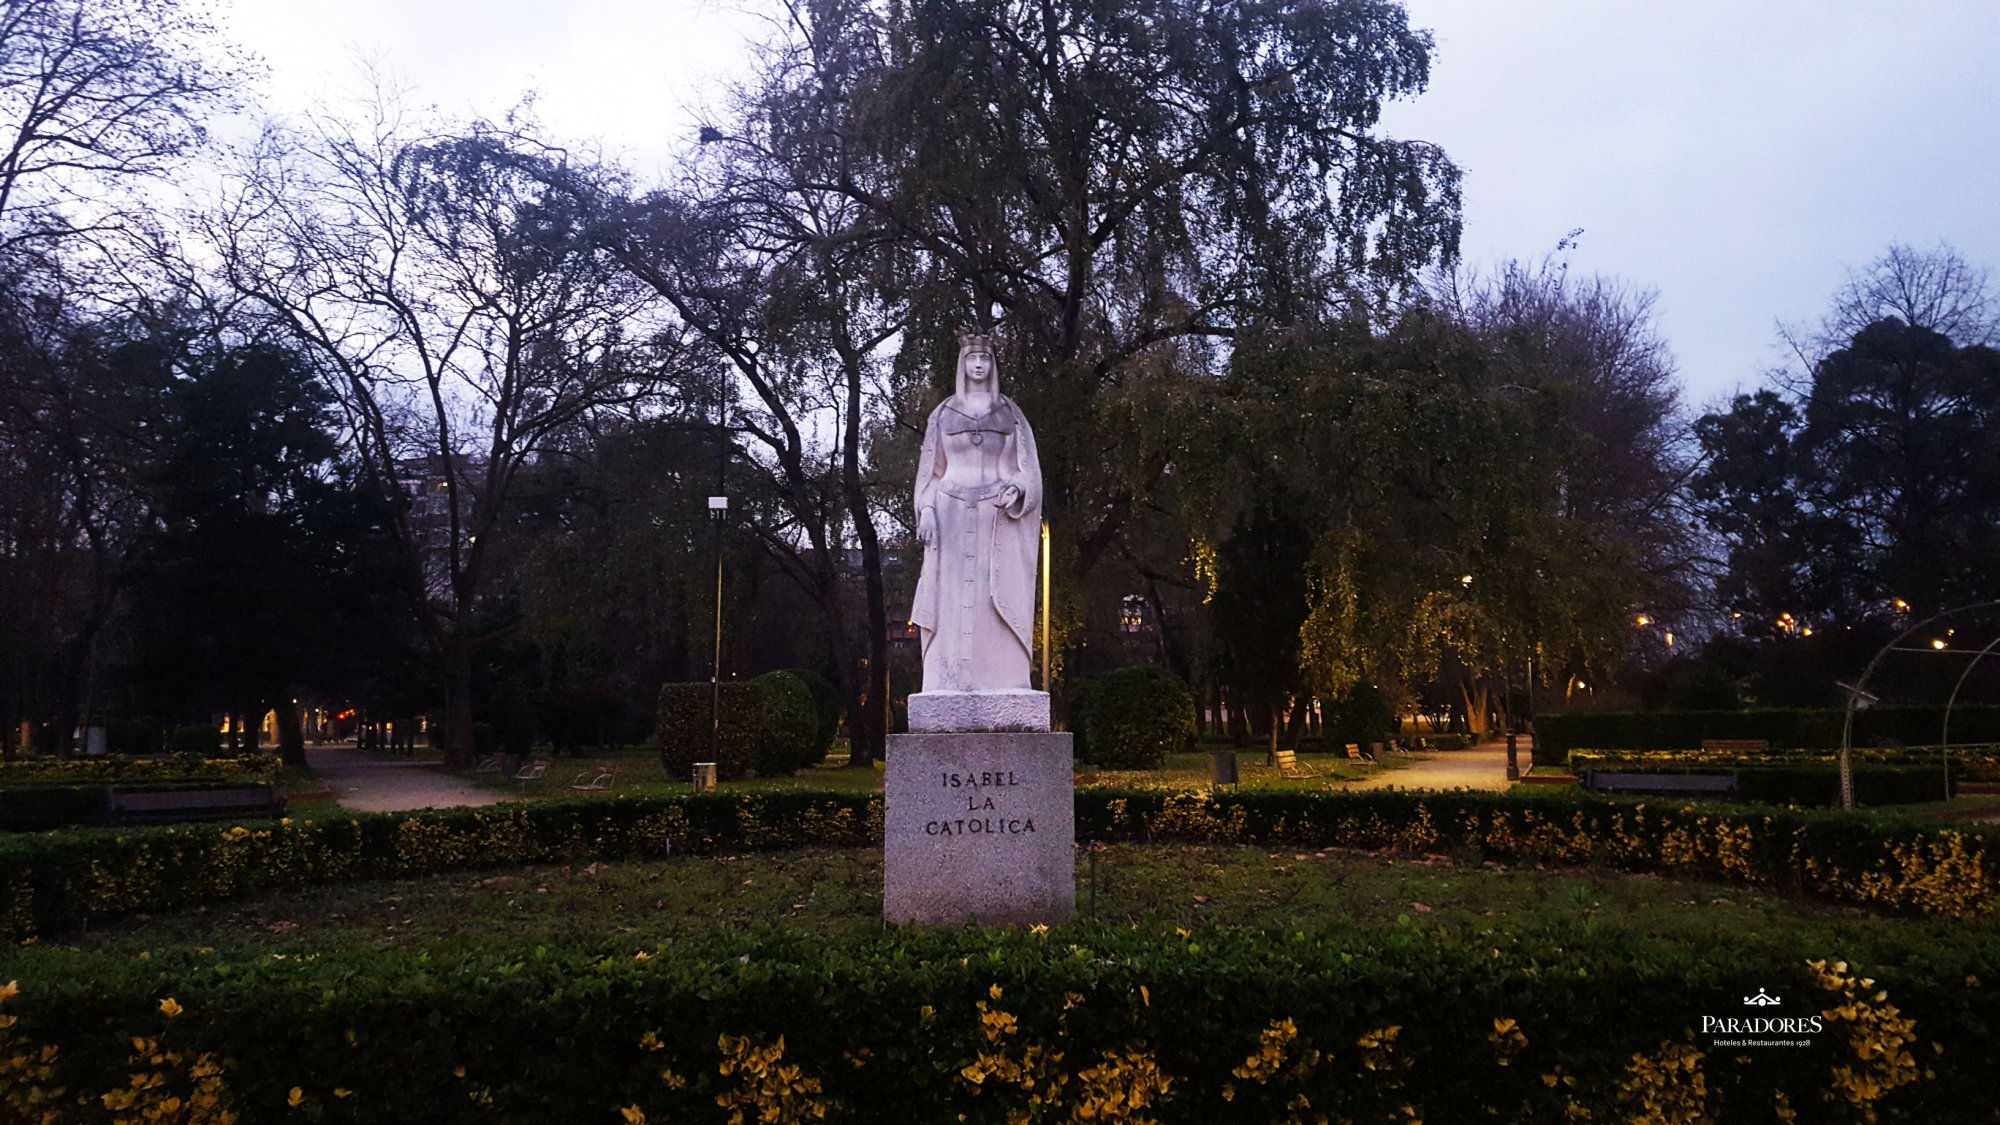 Parque Isabel la Católica Gijón Paradores